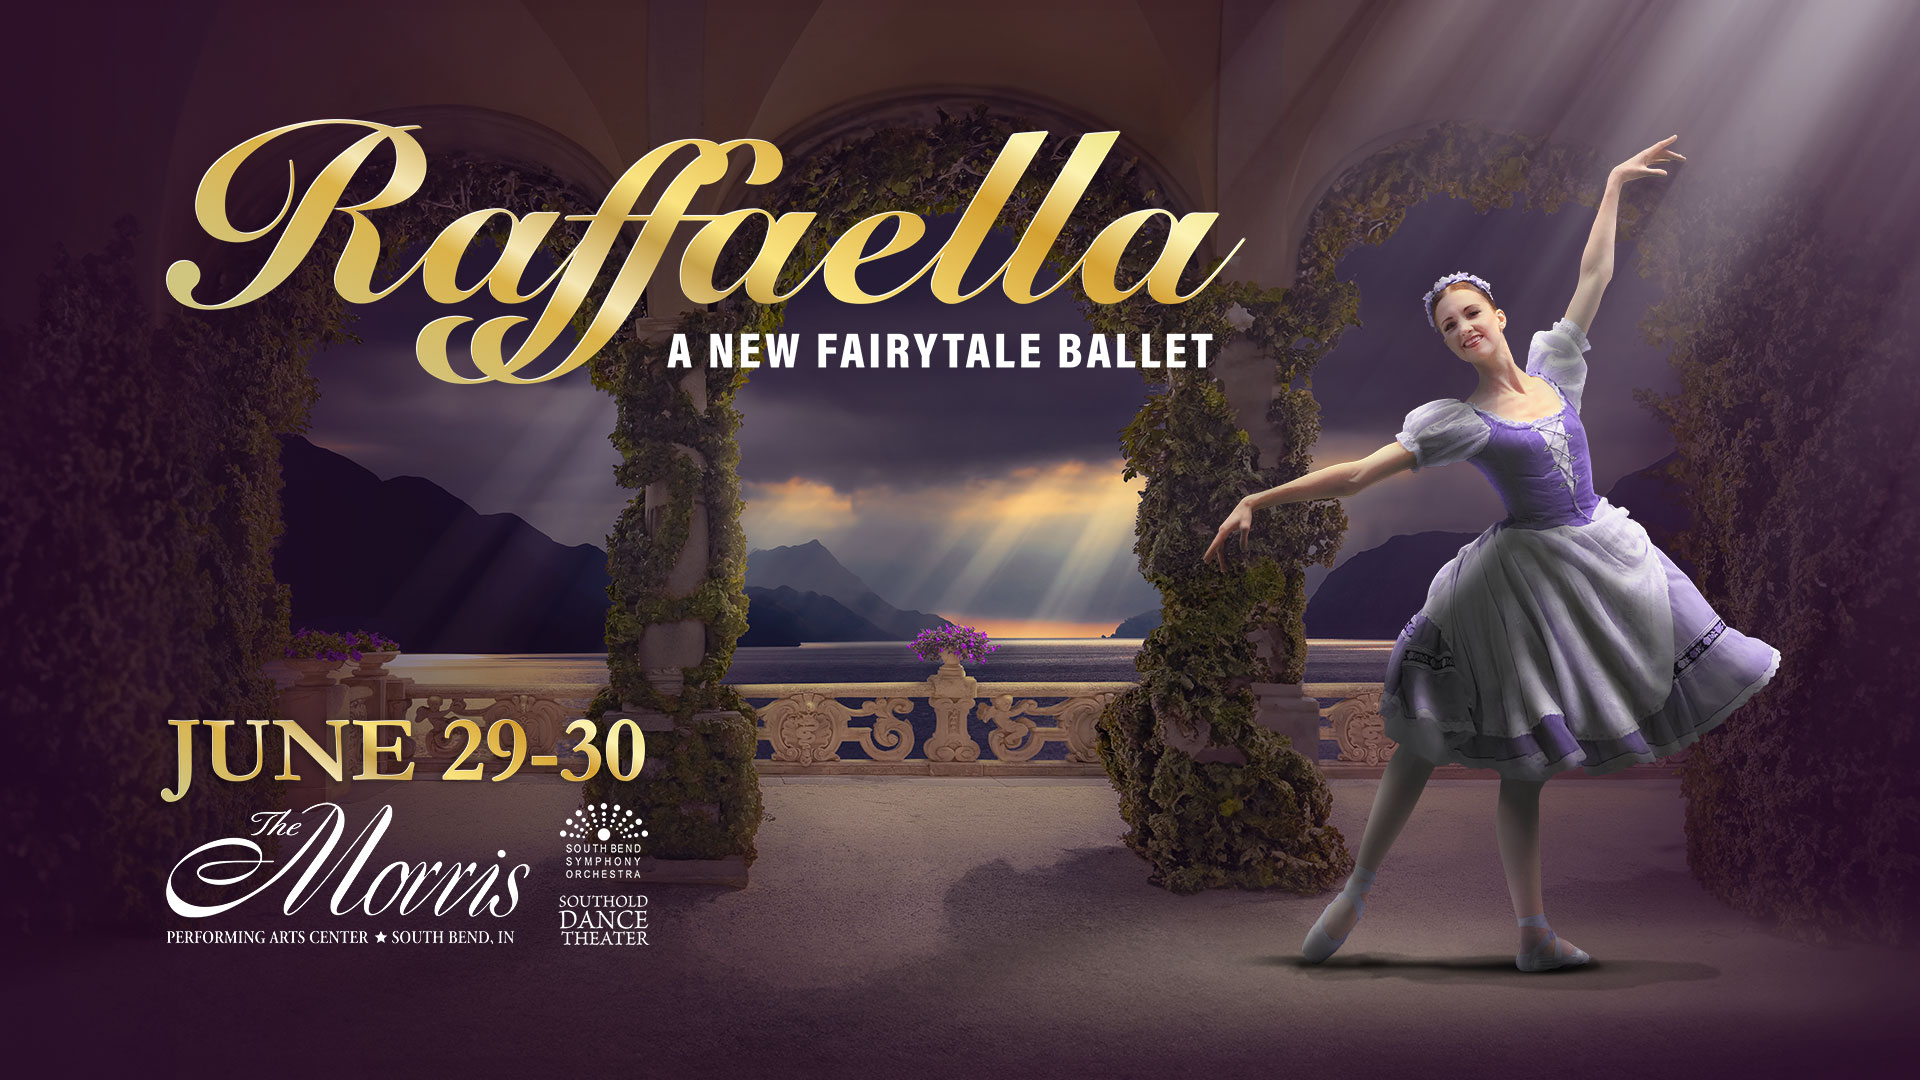 Raffaella ballet